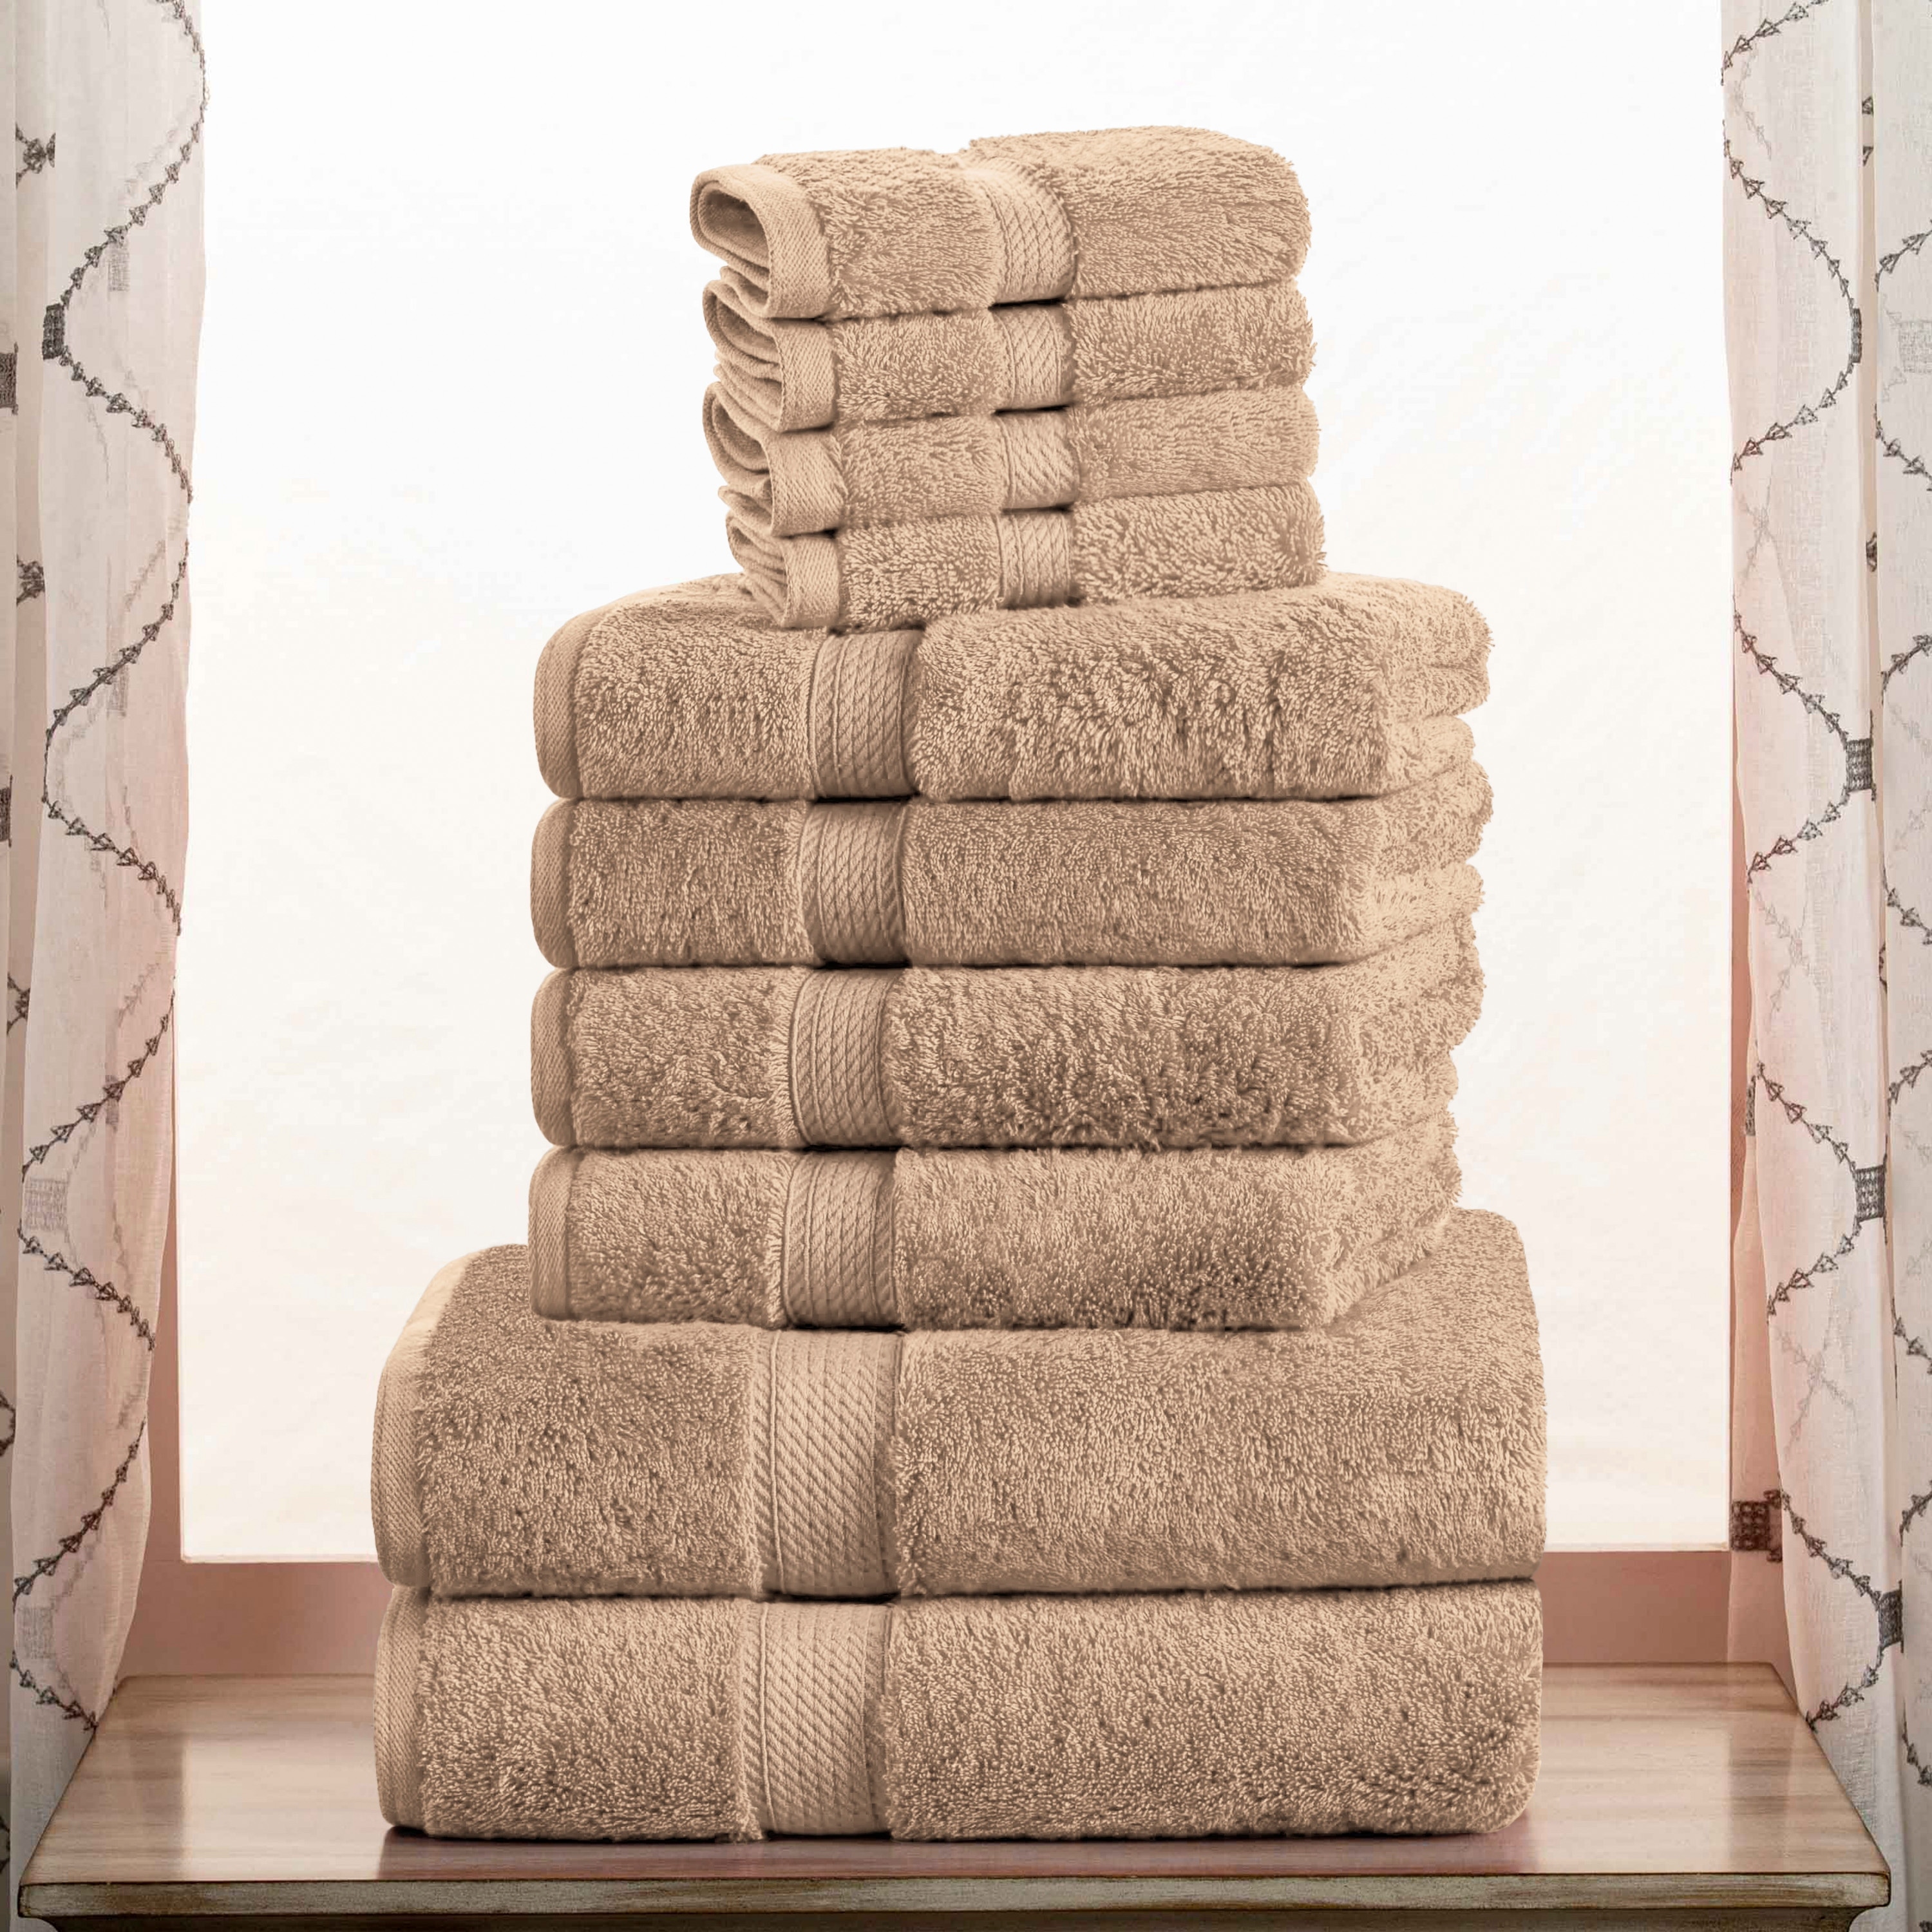 Superior Egyptian Cotton Heavyweight 6 Piece Towel Set